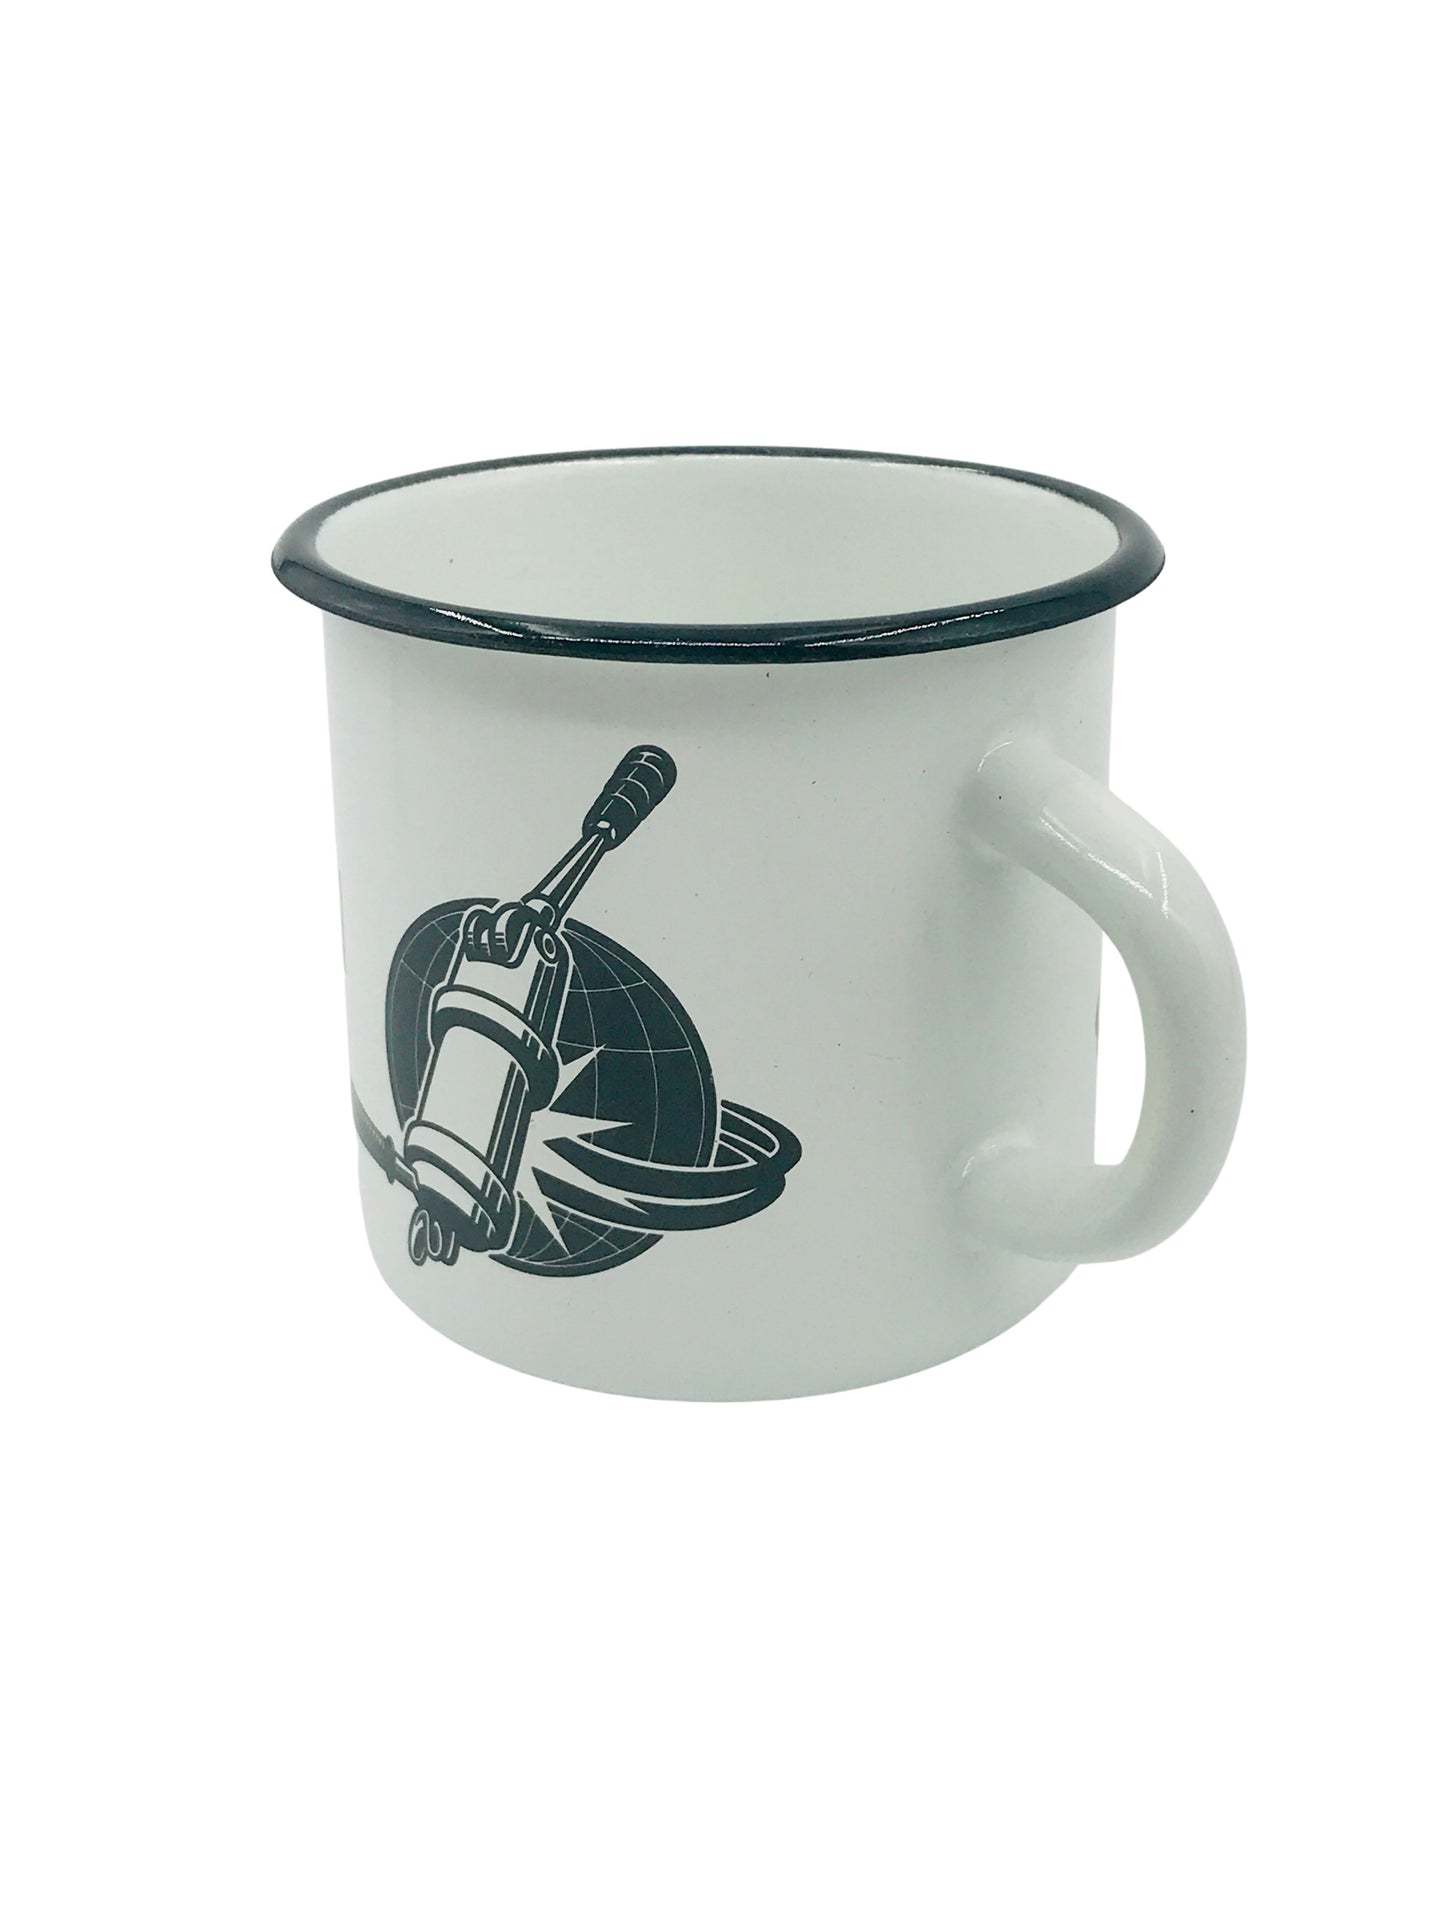 KVDW - Merchandise, KVDW enamel mug